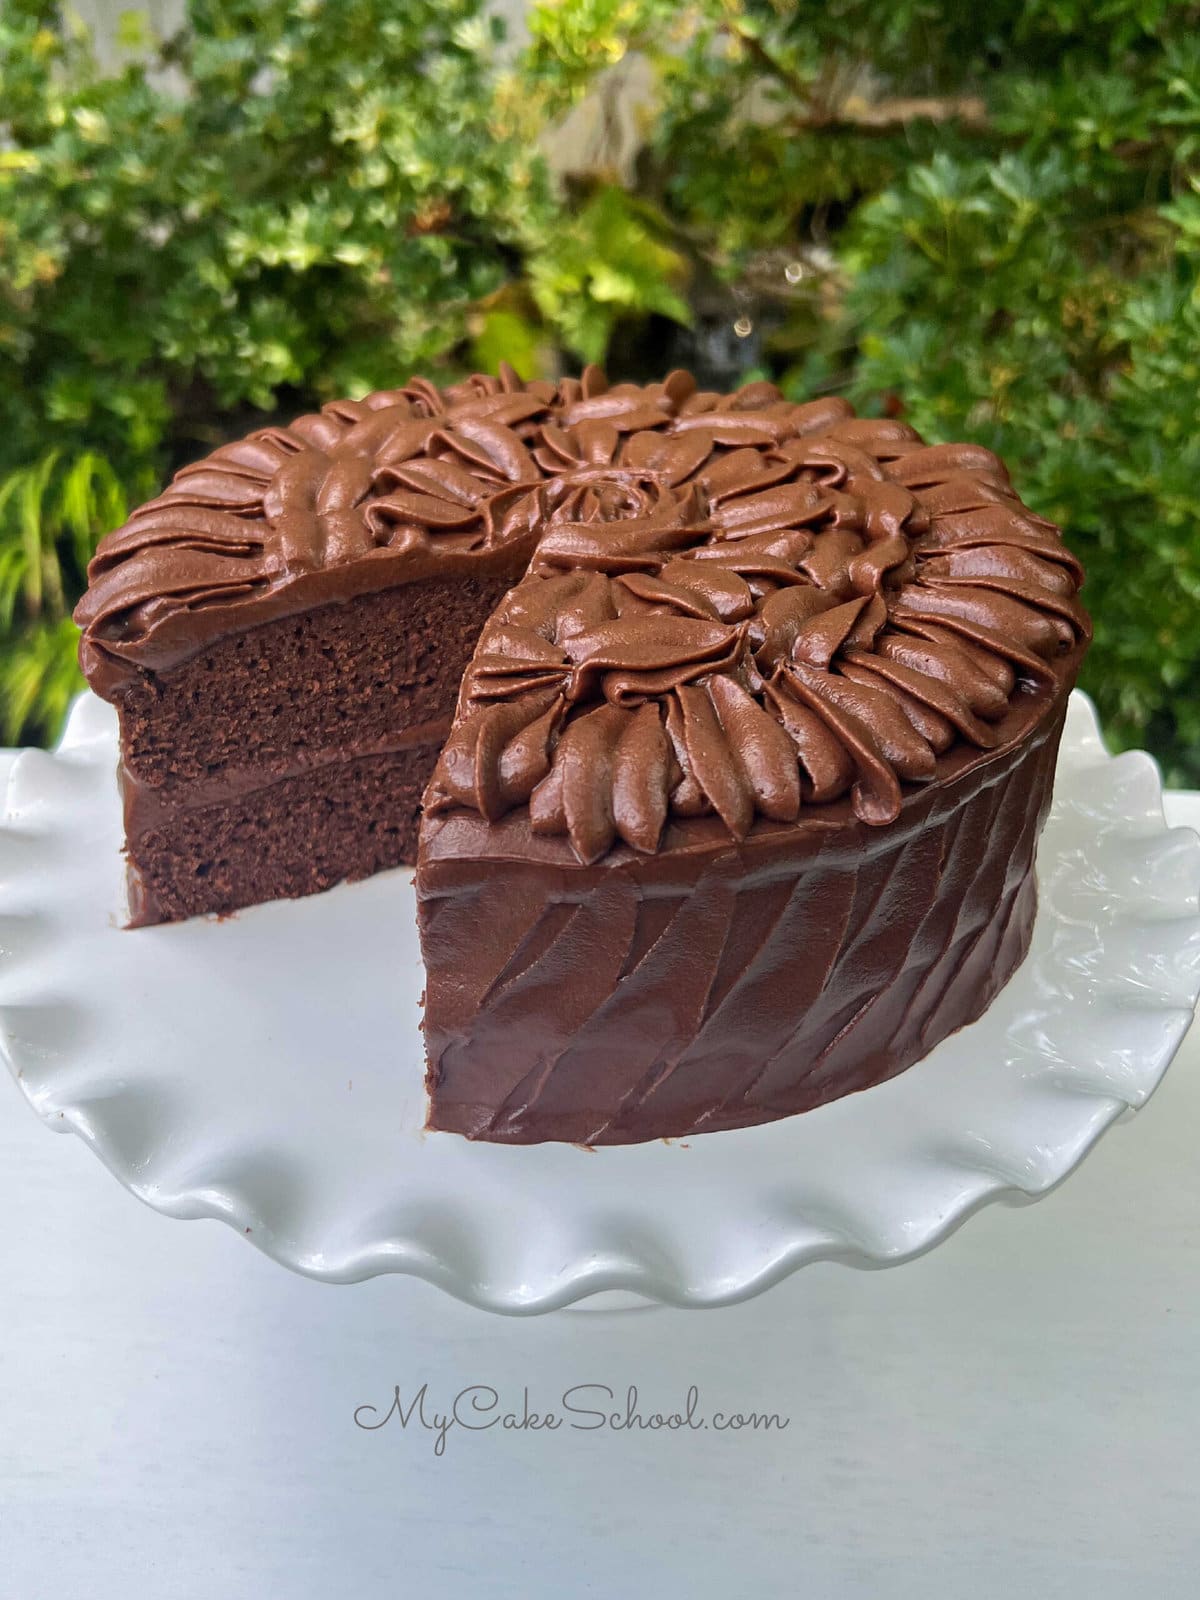 Brownie Cake, sliced, on a cake pedestal.